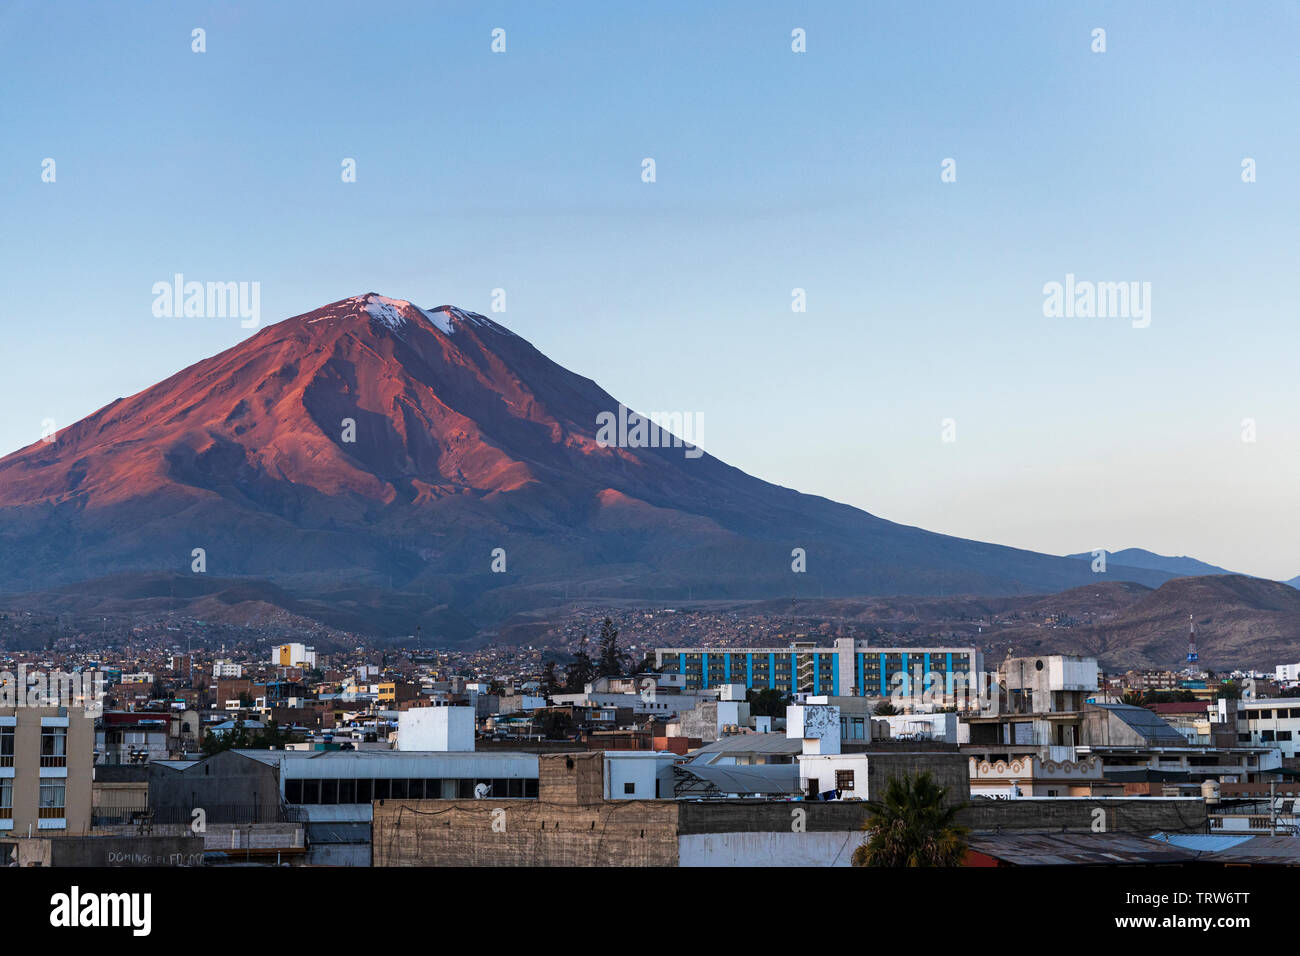 Volcano El Misti viewed from Arequipa, Peru, South America Stock Photo